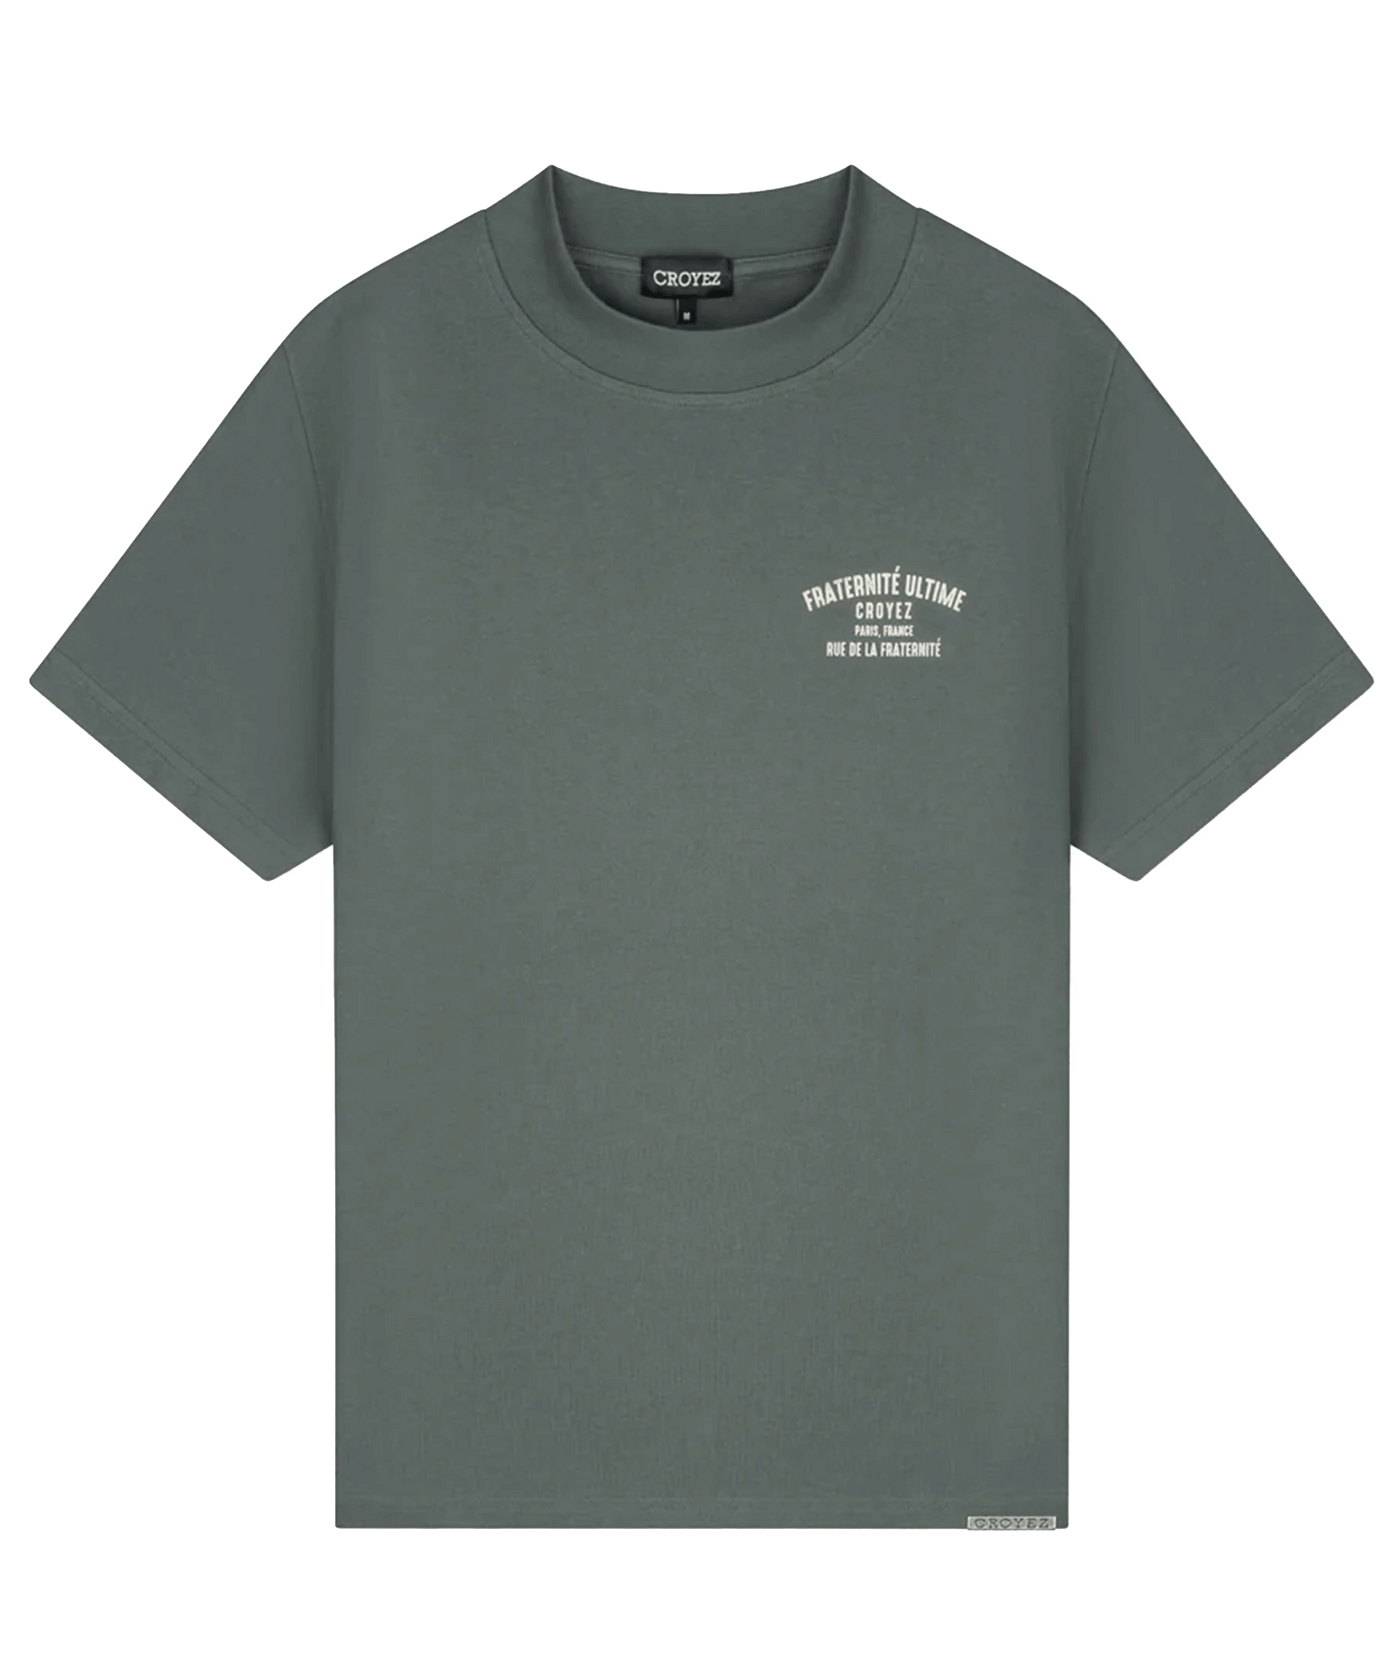 CROYEZ - Fraternite - T-shirt - Antra/off White